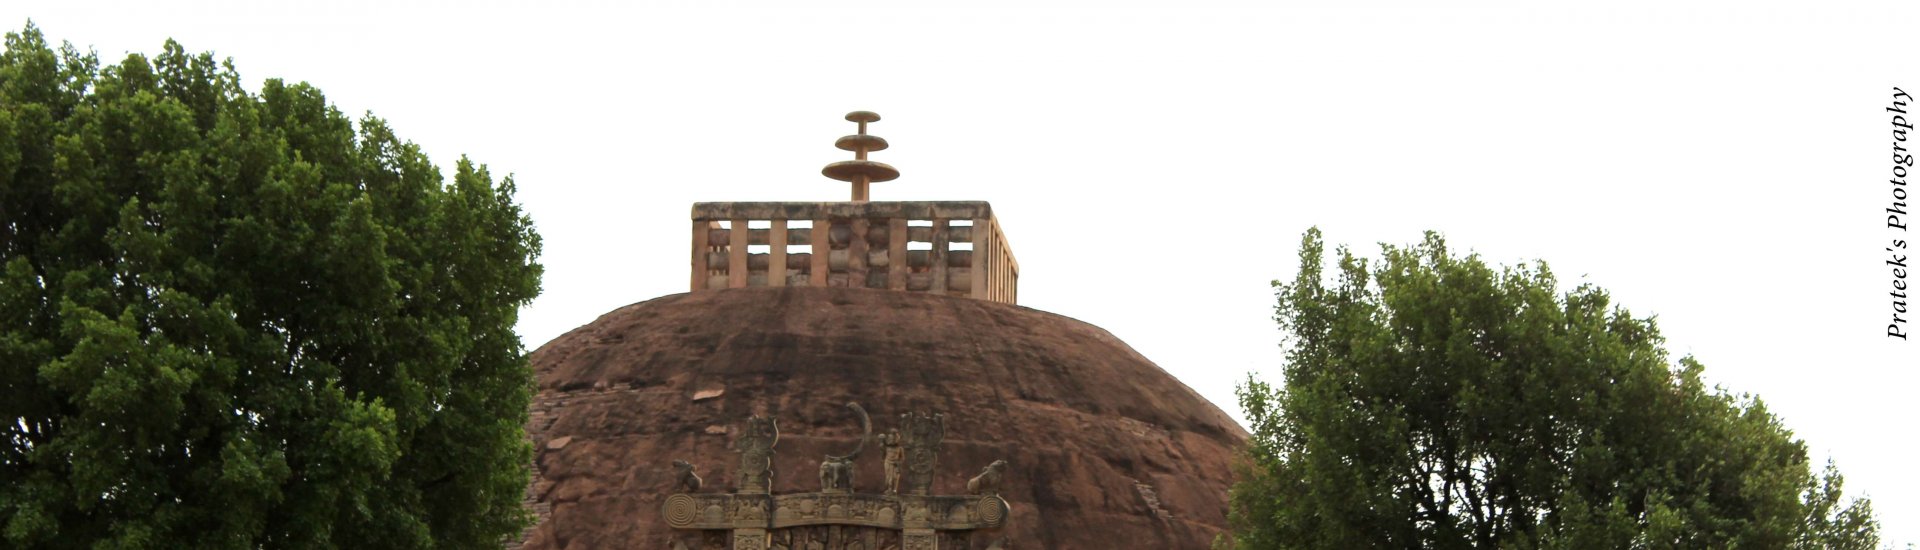 Sanchi Stupa-World Heritage Site